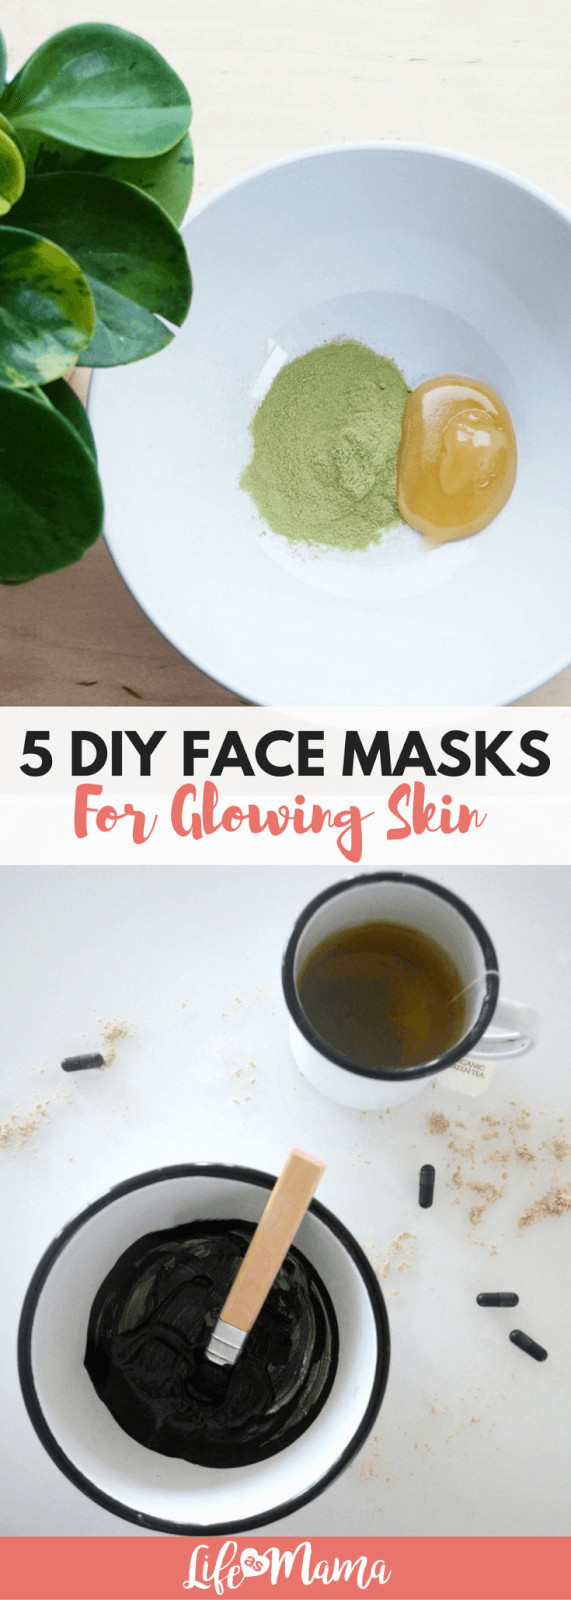 DIY Facial Mask For Glowing Skin
 5 DIY Face Masks For Glowing Skin